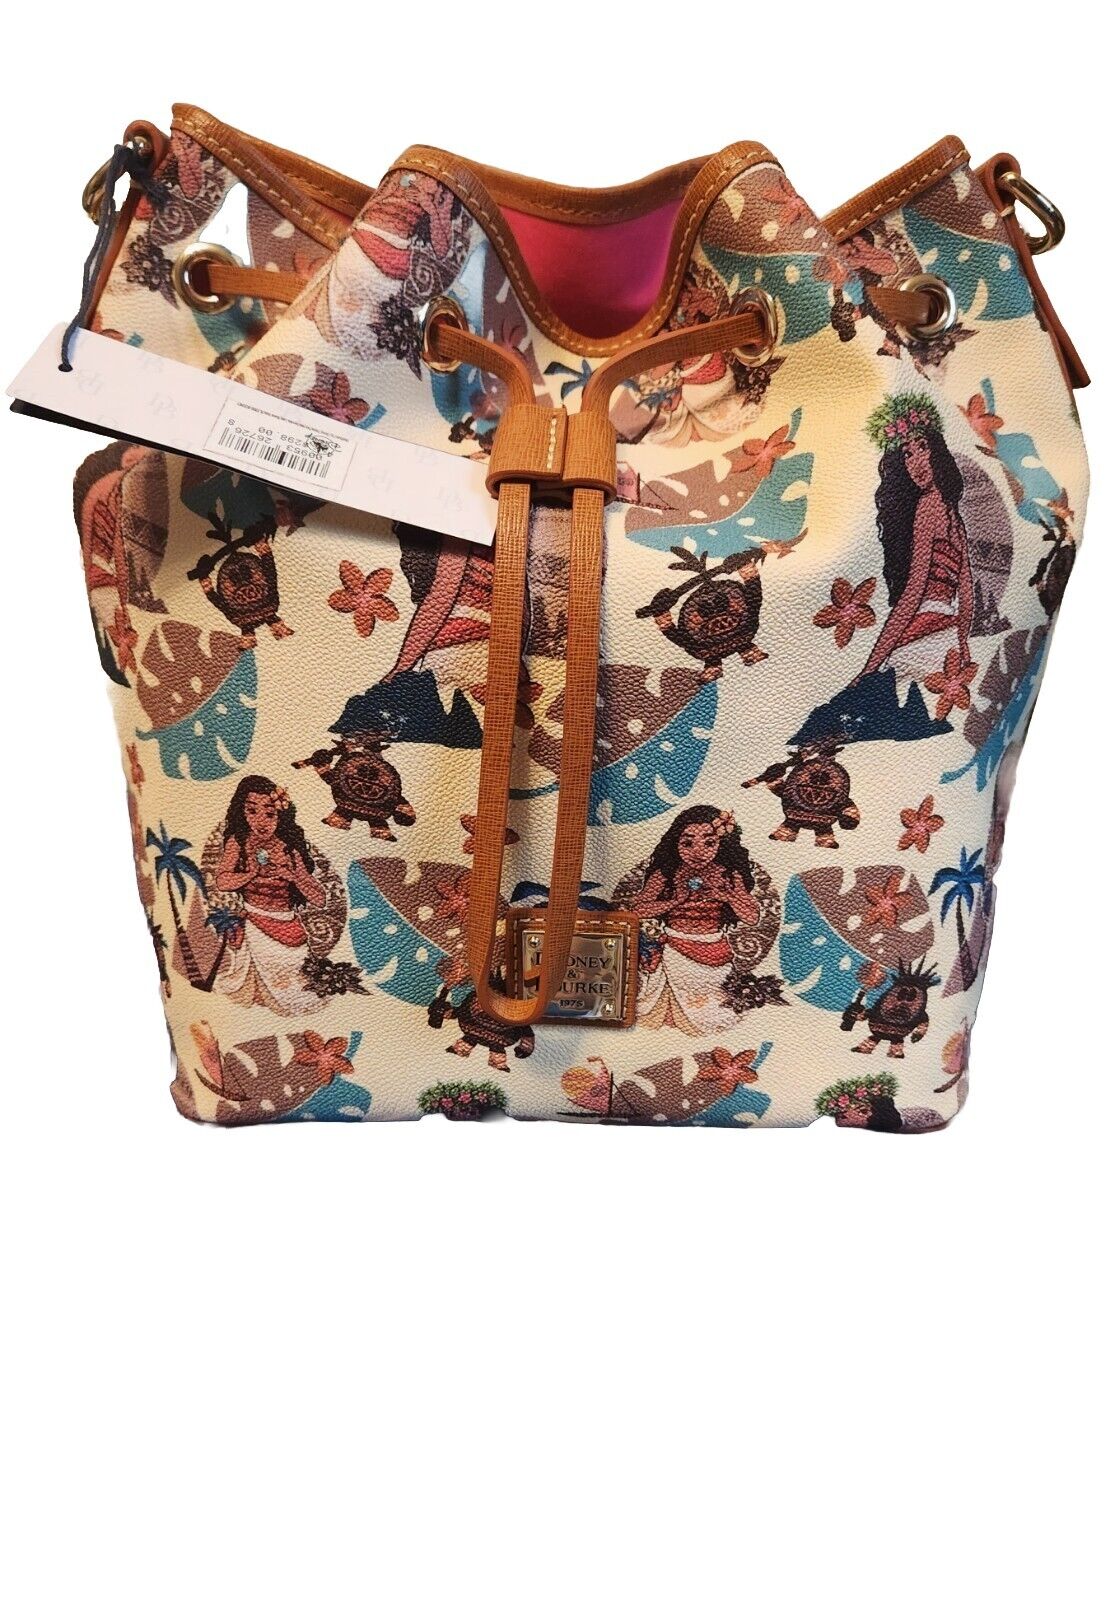 Moana 2023 Drawstring Bag by Disney Dooney & Bourke New With Tags